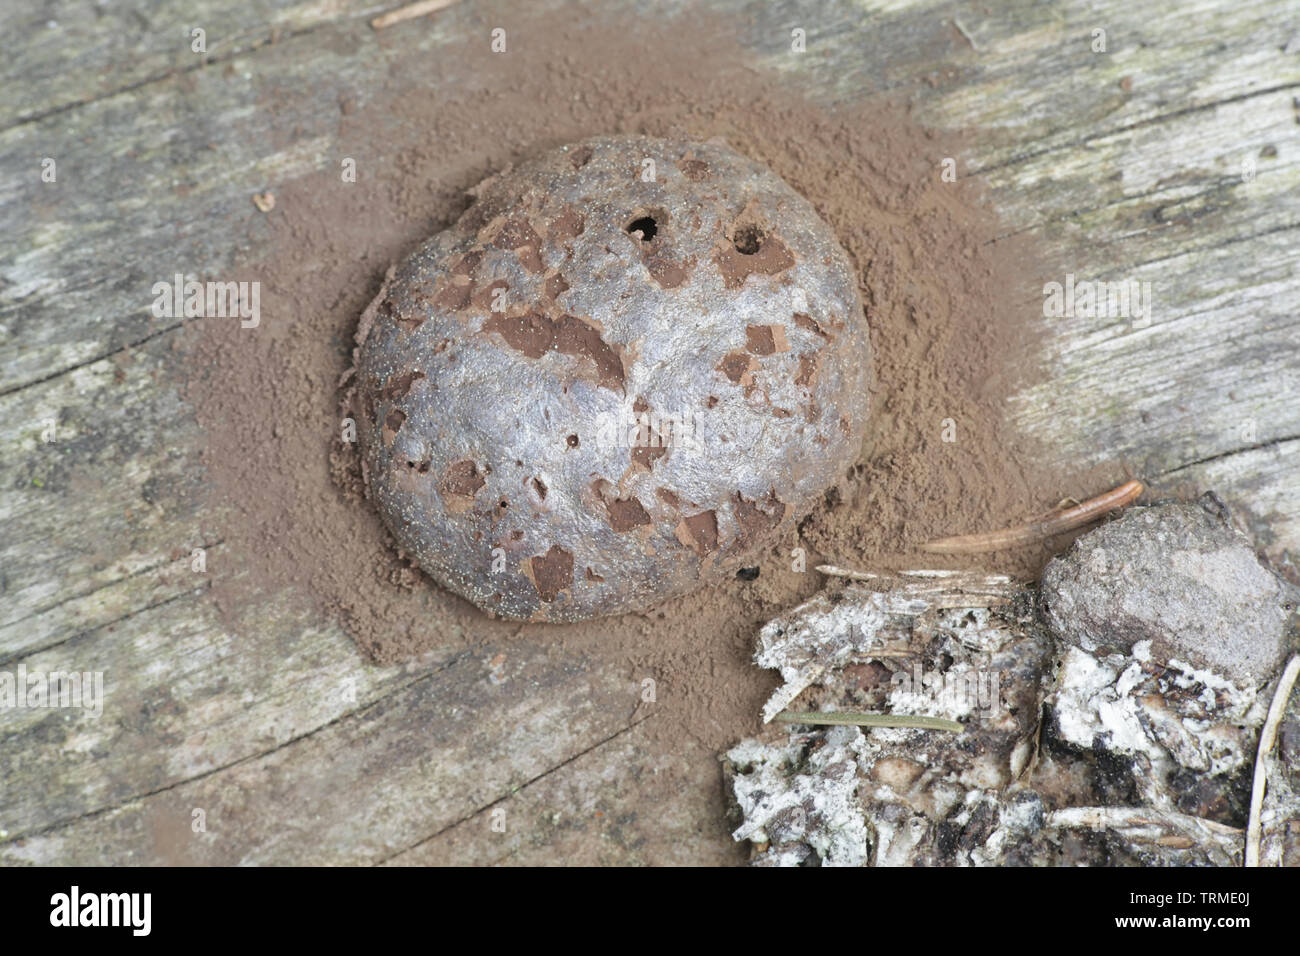 Enteridium lycoperdon, the False Puffball slime mold releasing its spores Stock Photo